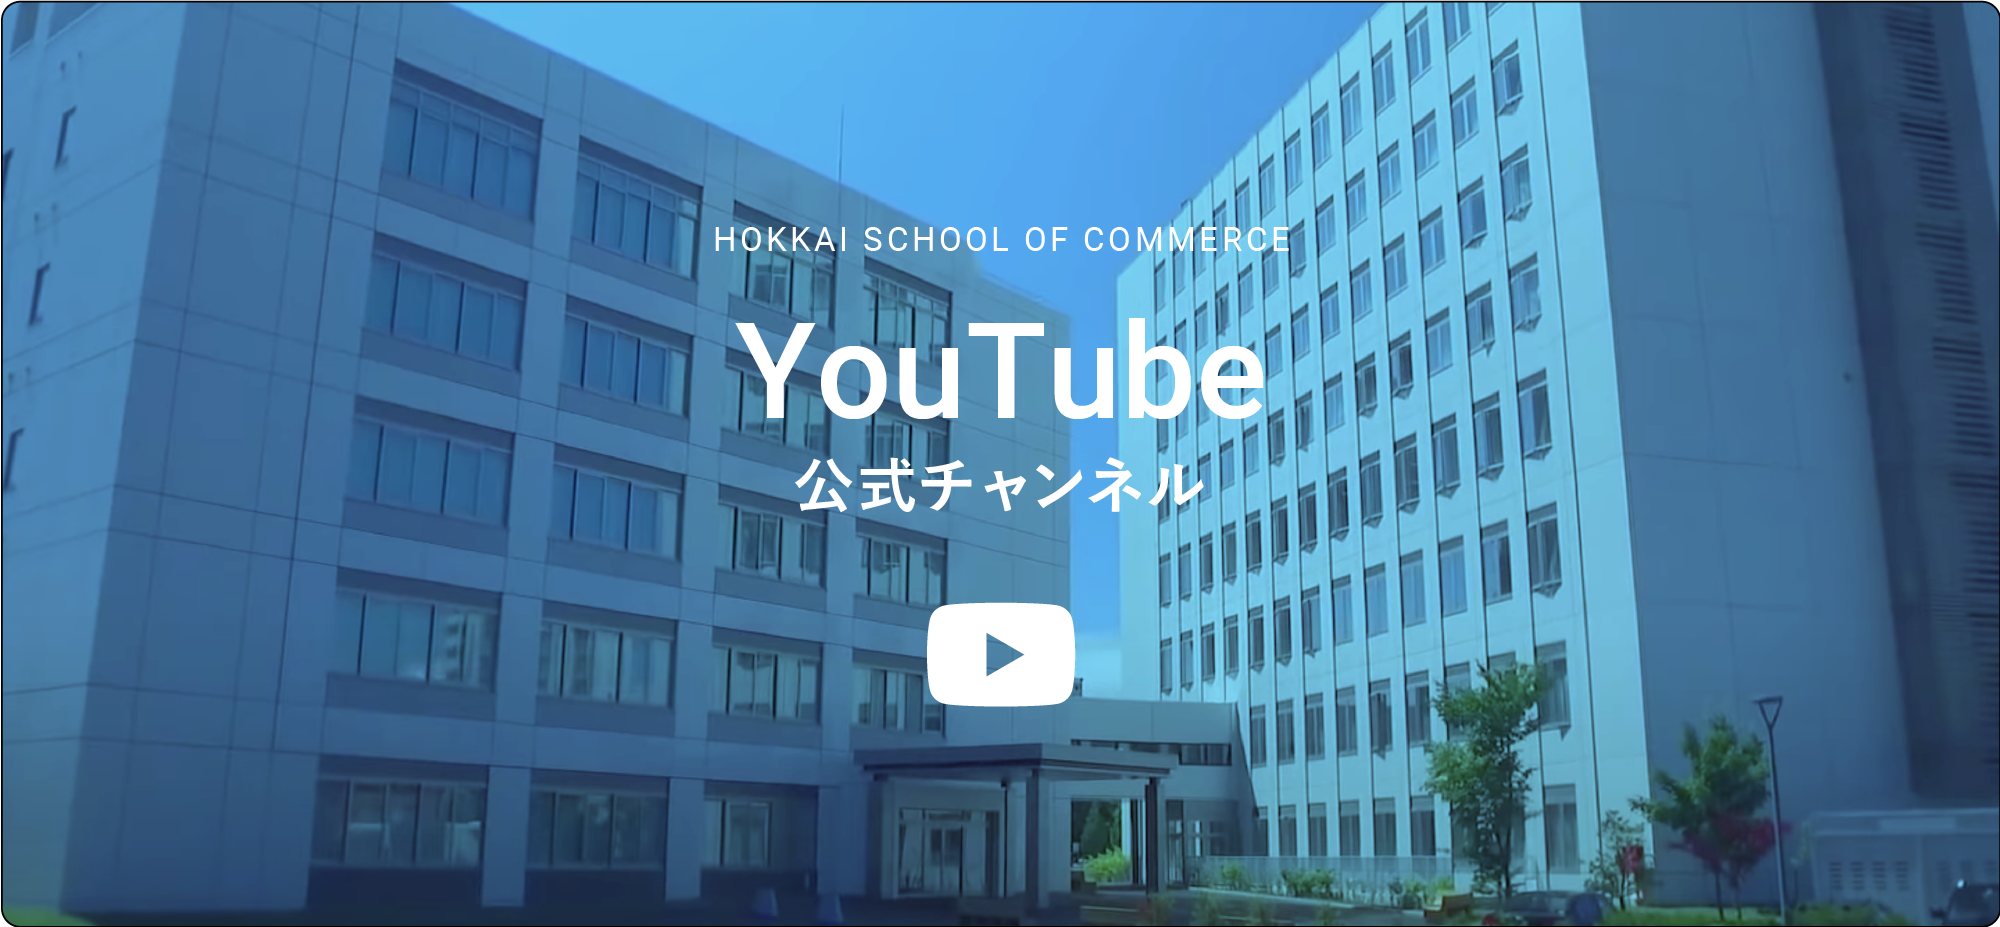 HOKKAI SCHOOL OF COMMERGE YouTube ch